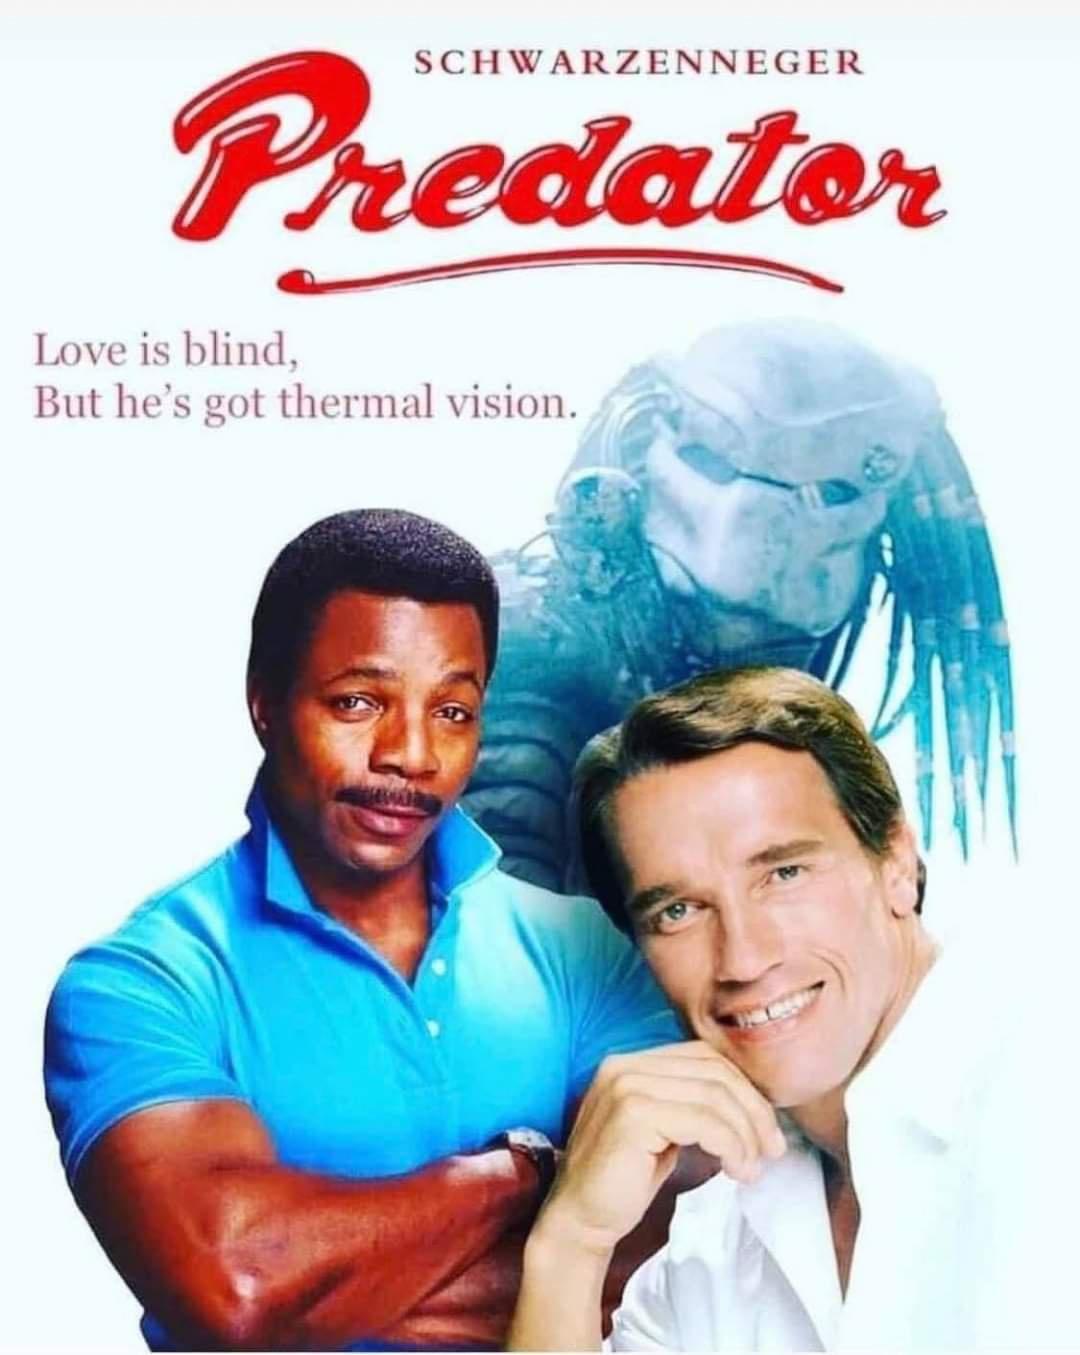 predator poster canada - Schwarzenneger Predator Love is blind, But he's got thermal vision.